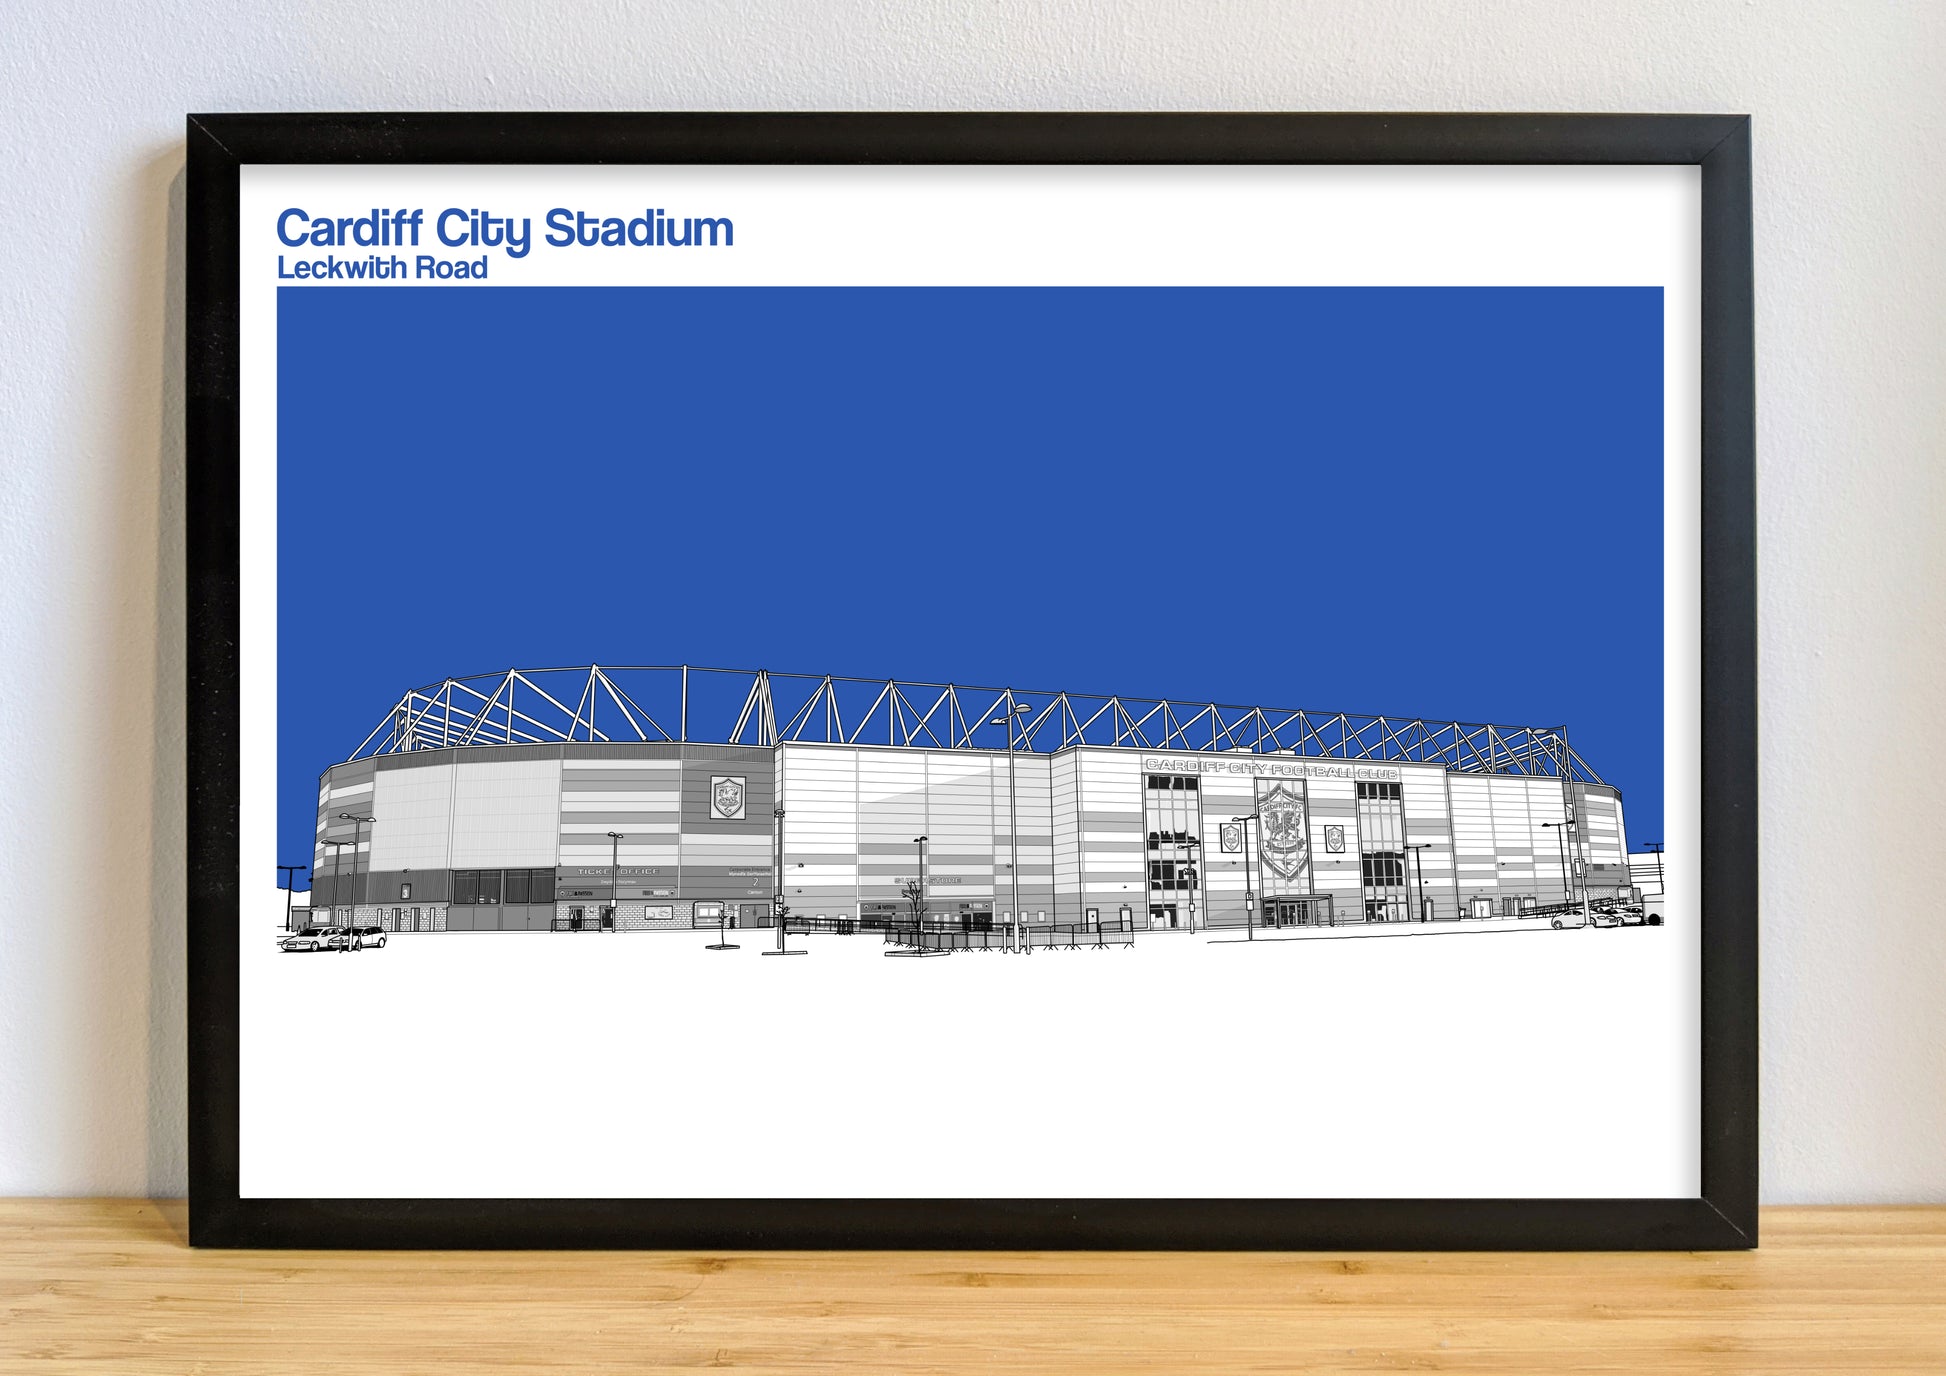 Cardiff City FC Gifts - Football Prints & Wall Art